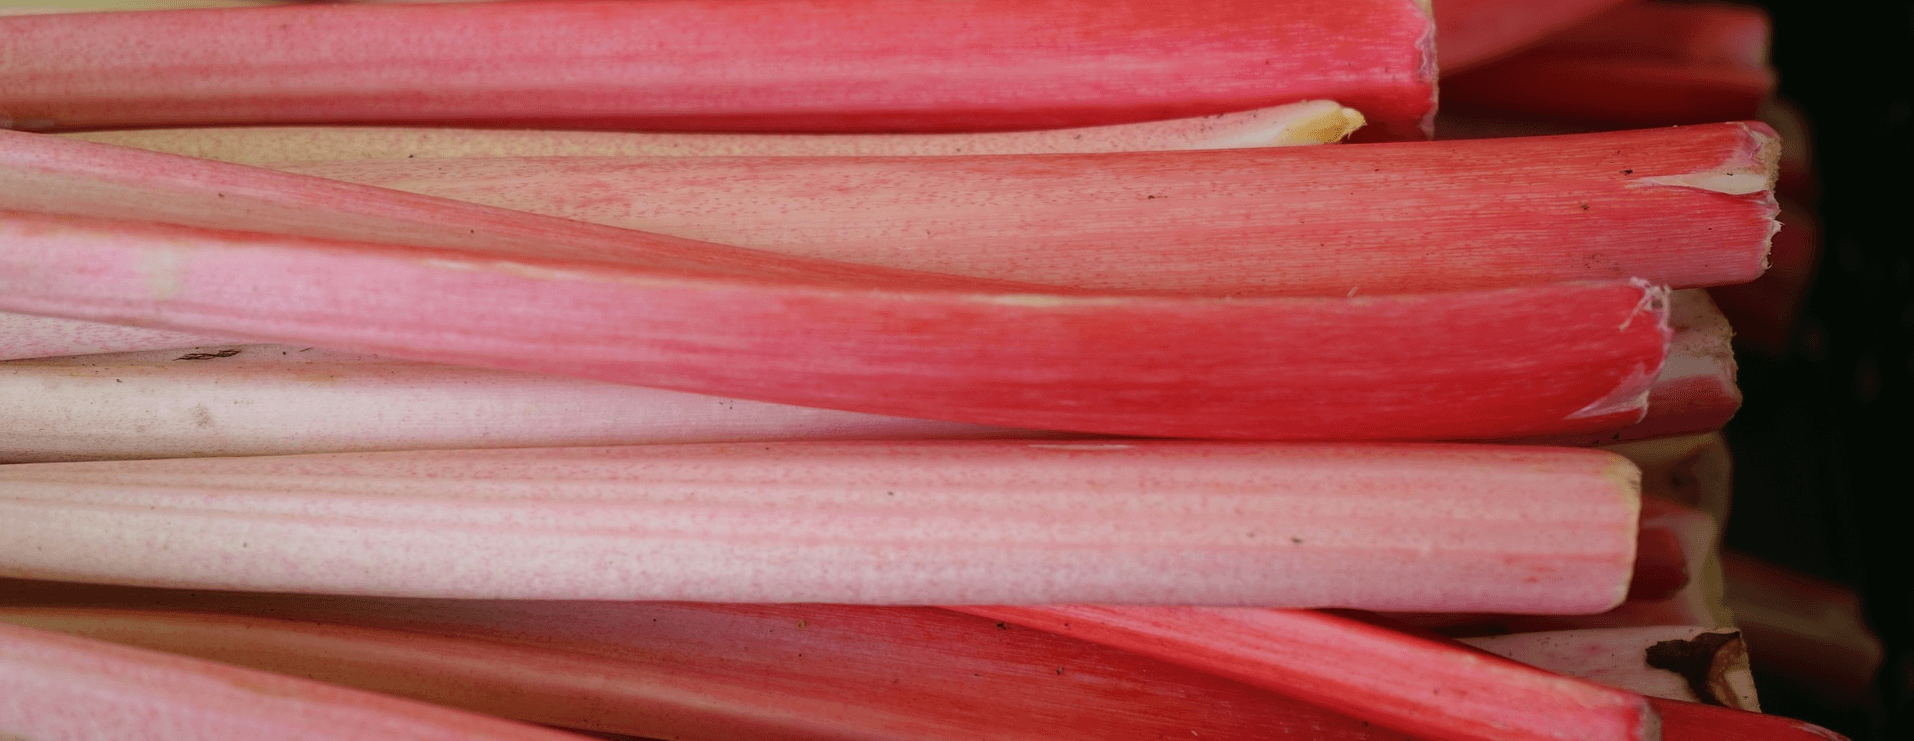 close up of red stalks of rhubarb running horizontally across image